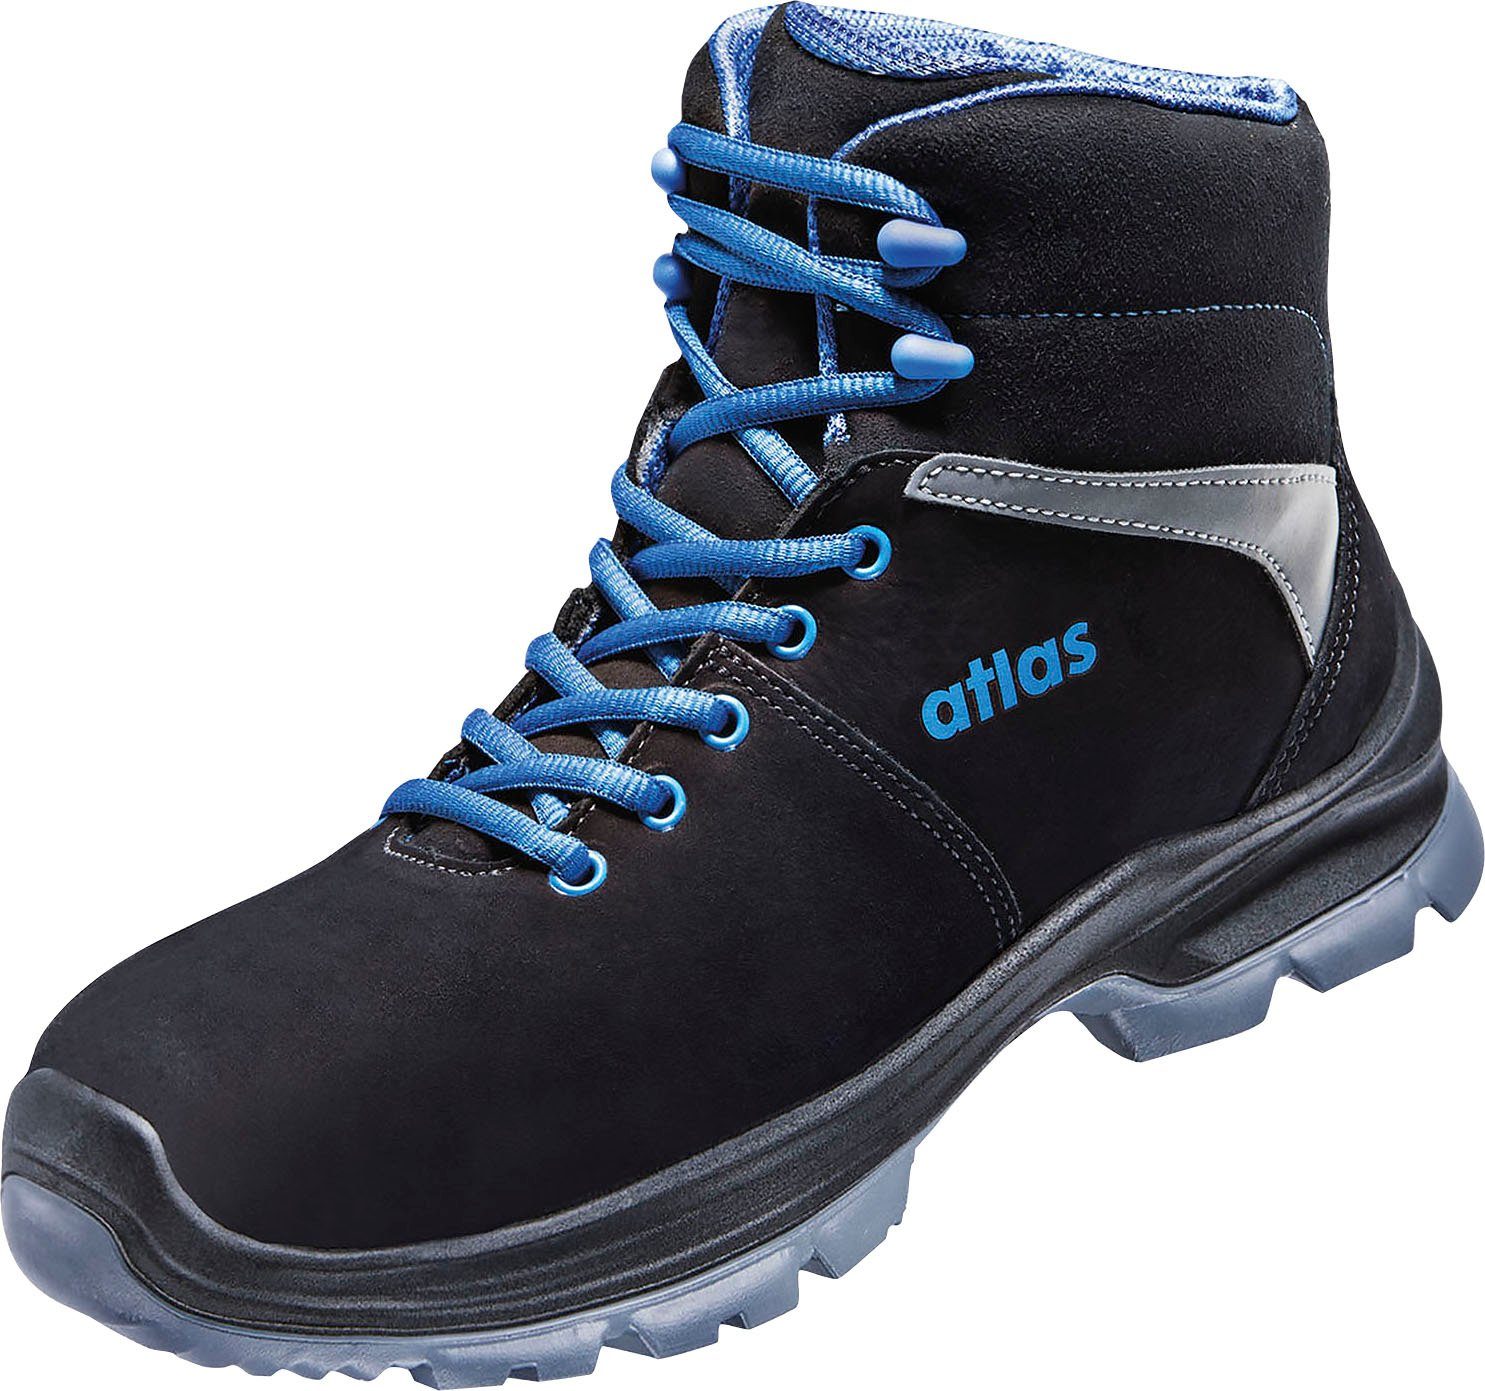 Atlas Schuhe EN20345 blue 494 805 S3 2.0 Sicherheitsschuh XP SL ESD